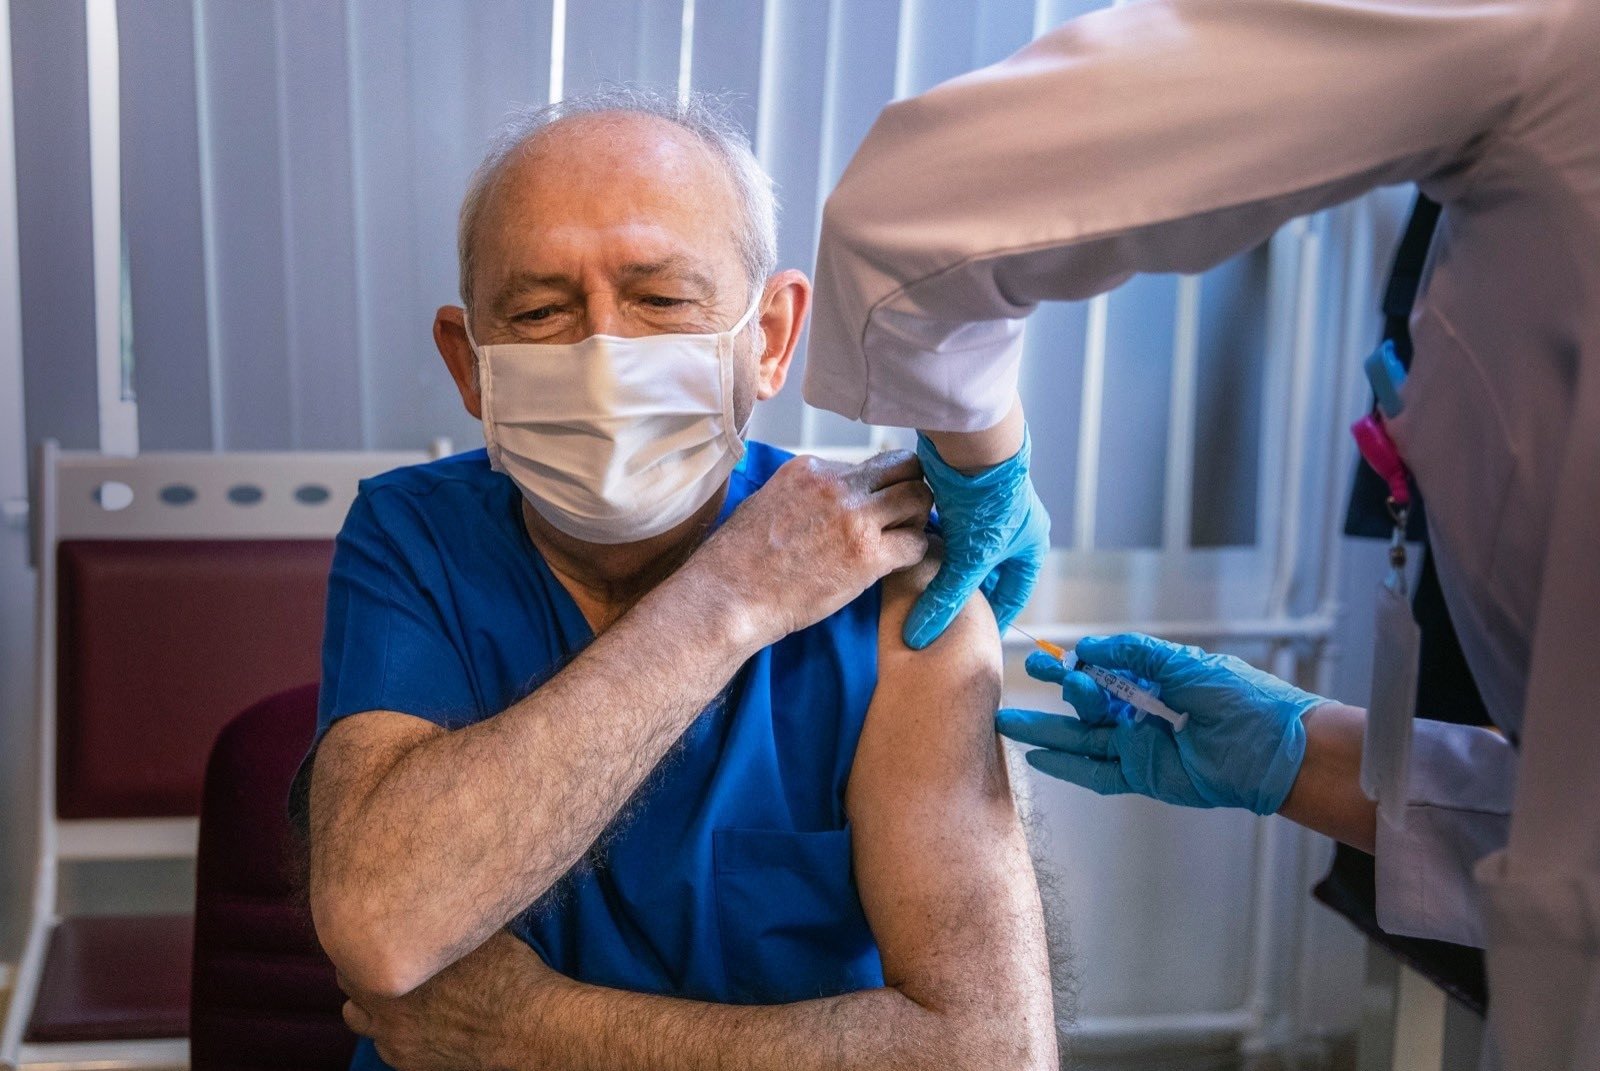 Republican People’s Party Chairperson Kemal Kılıçdaroğlu gets a COVID-19 vaccine shot, in the capital Ankara, Turkey, Feb. 12, 2021. (İHA PHOTO)